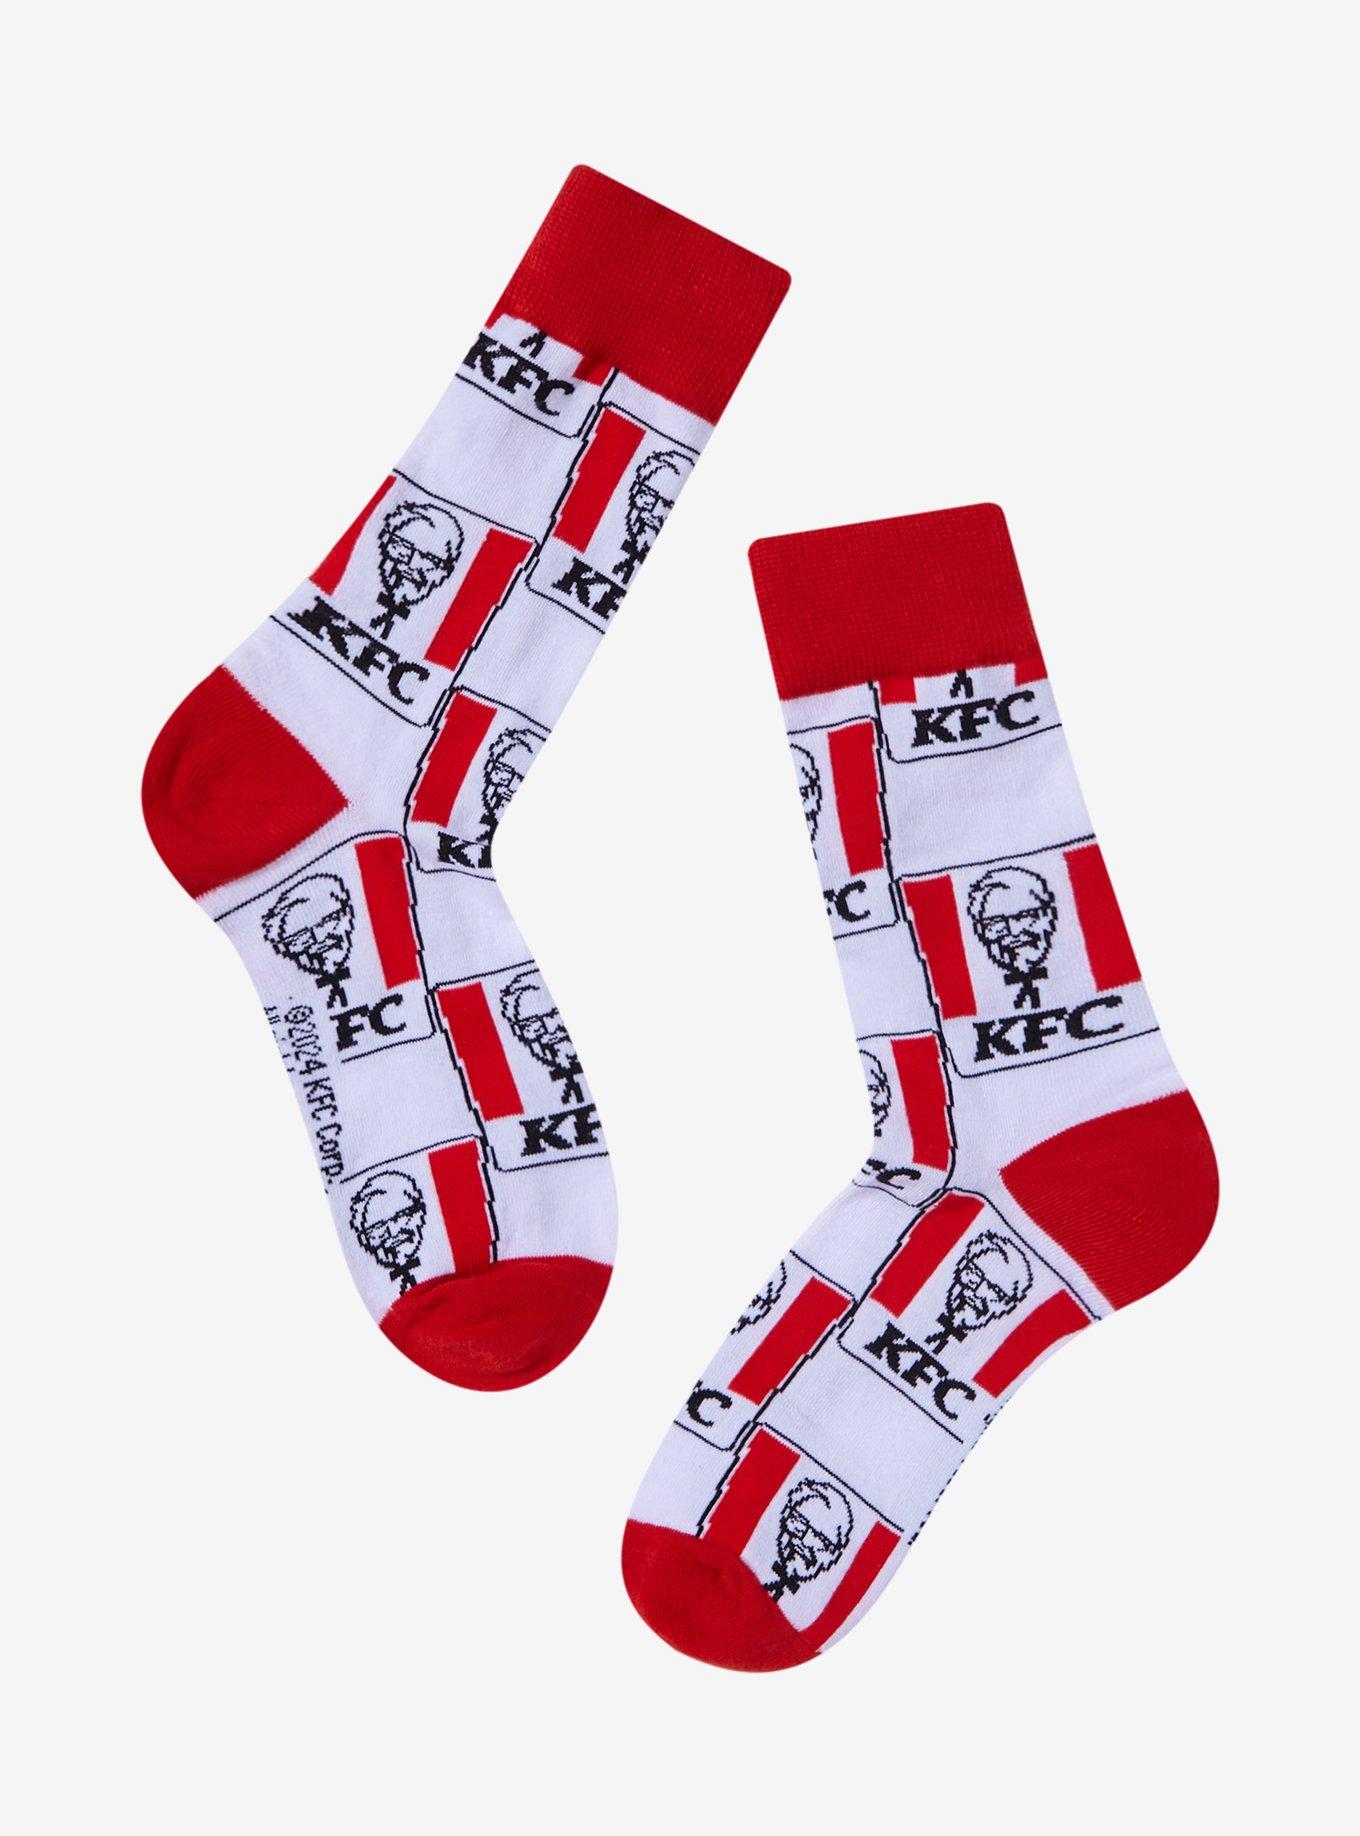 KFC Chicken Bucket Allover Print Crew Socks - BoxLunch Exclusive, , hi-res